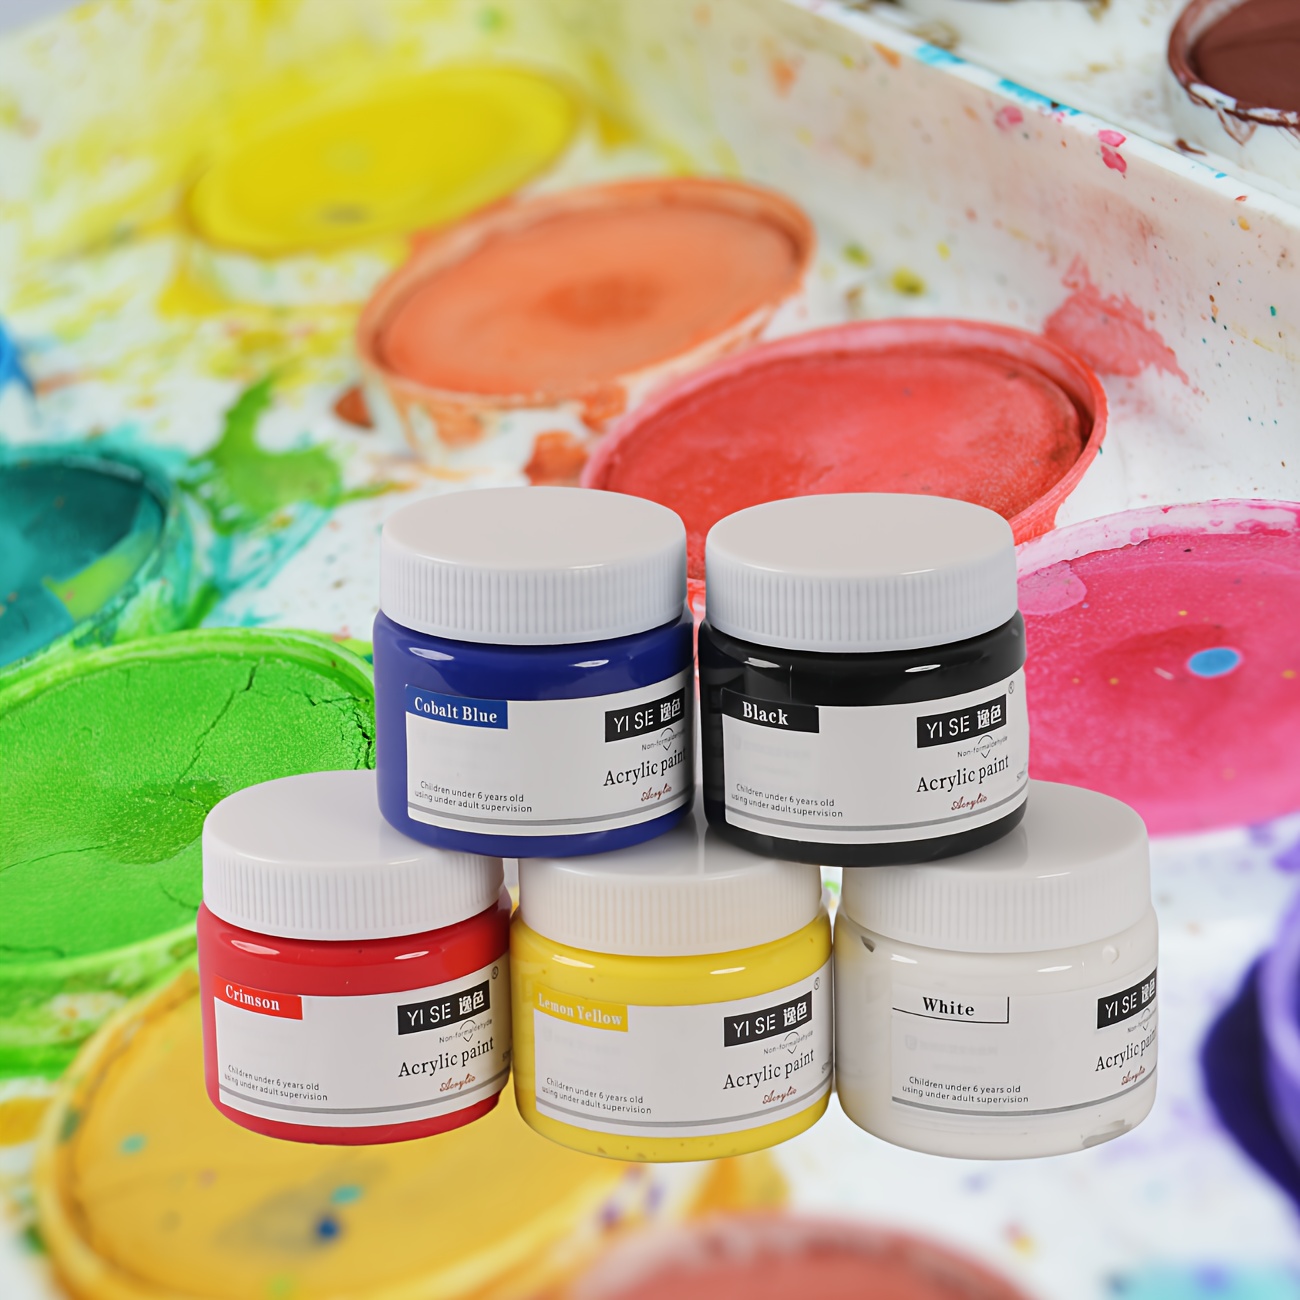 Marbling Paint Kit Water-based Art Paint Set Diy Painting On Water